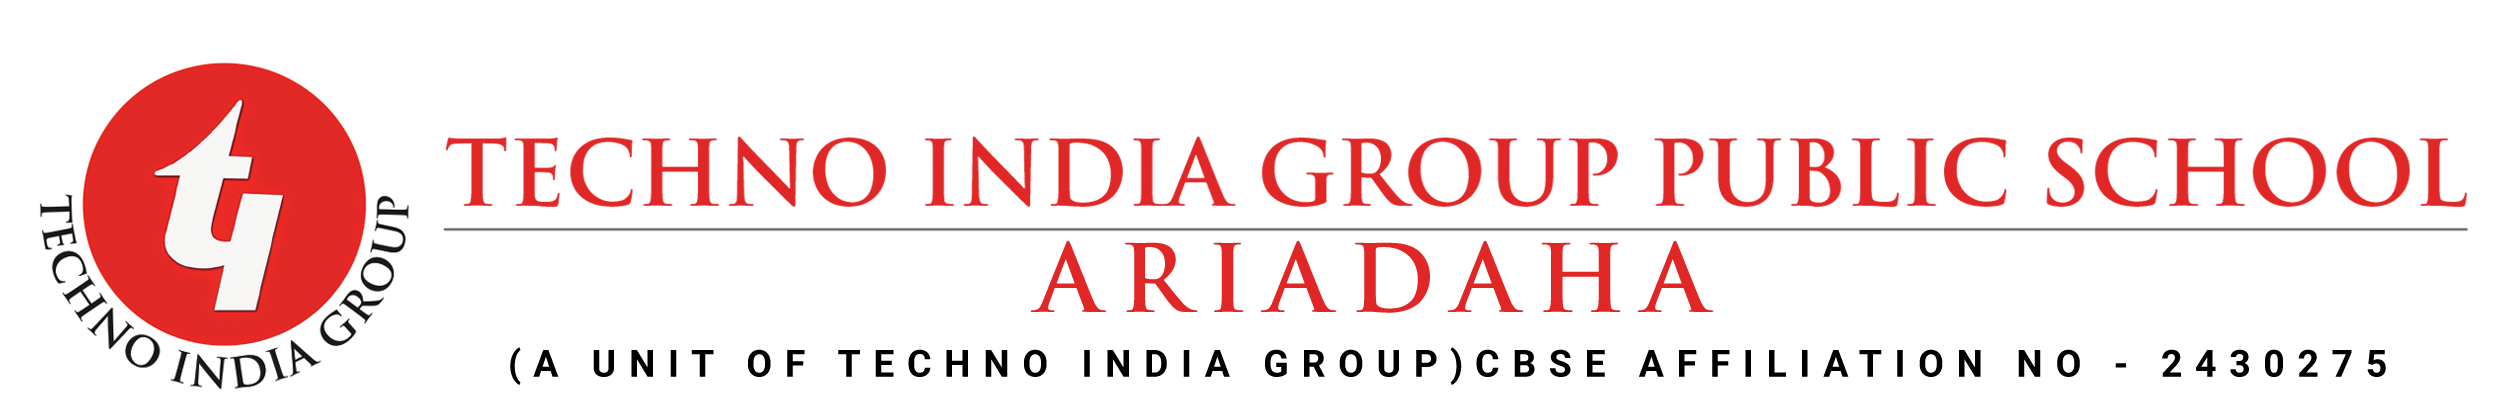 TIGPS Ariadaha | Unit of Techno India Group